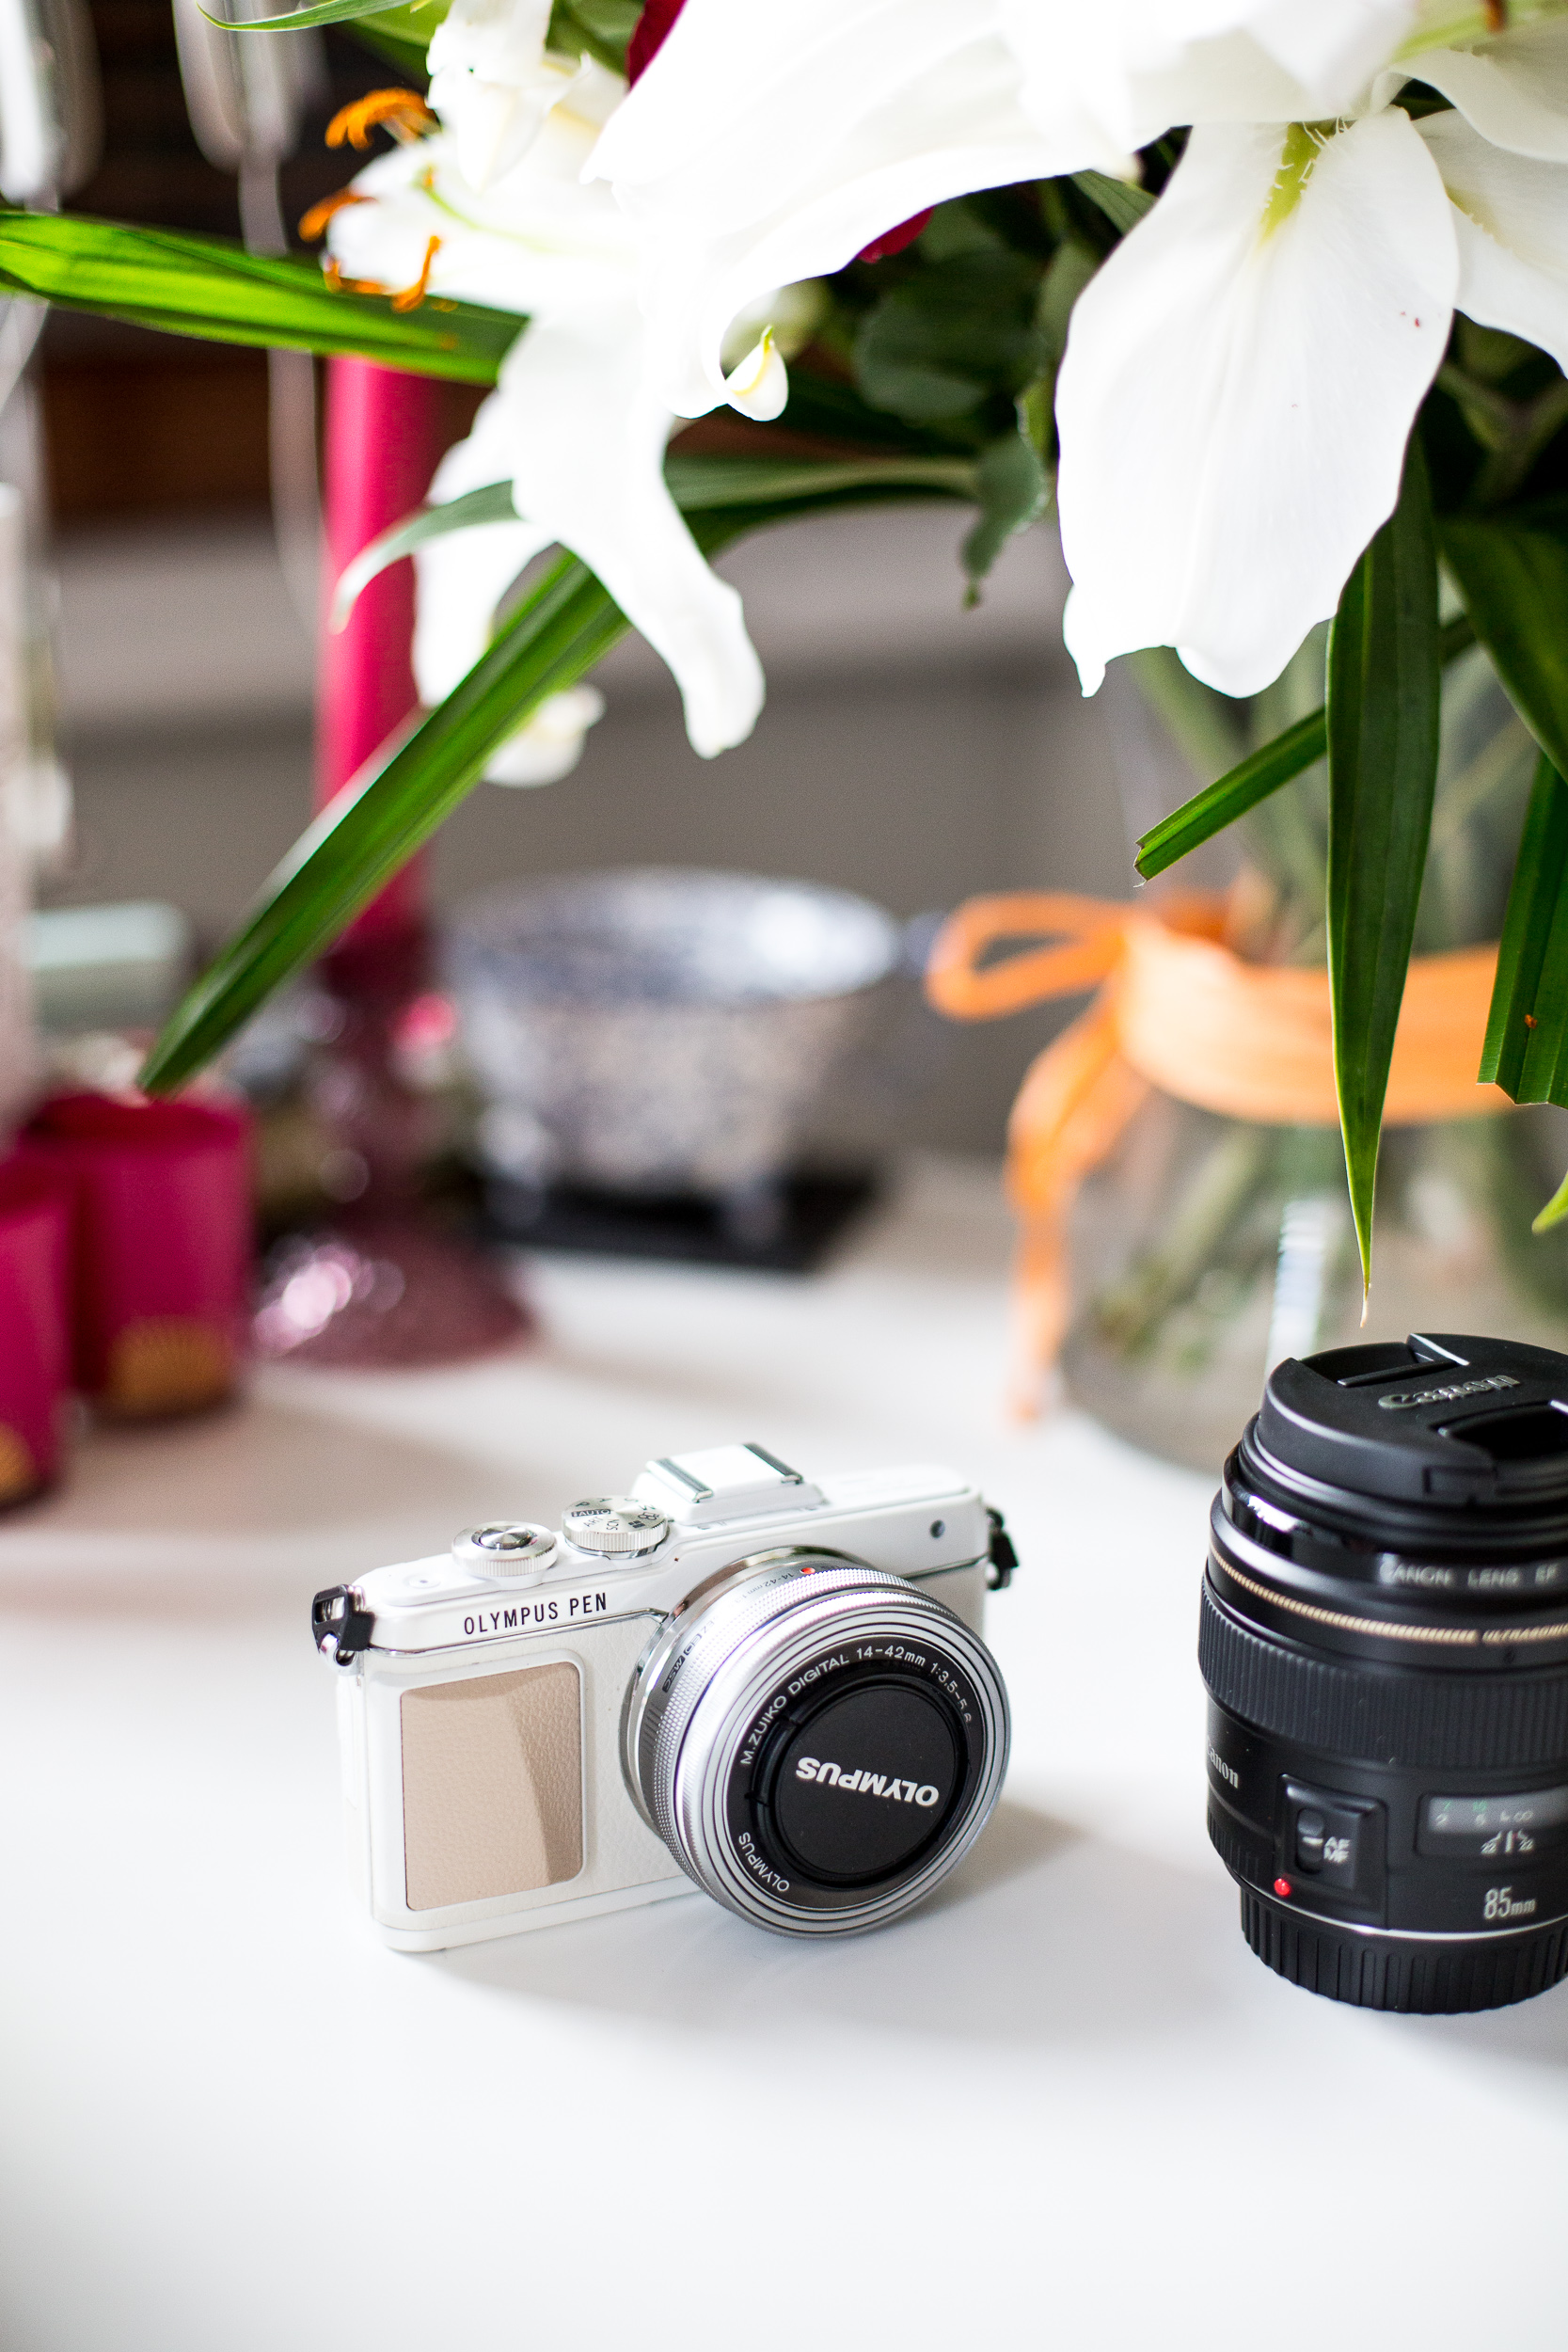 Blog Photography Tips